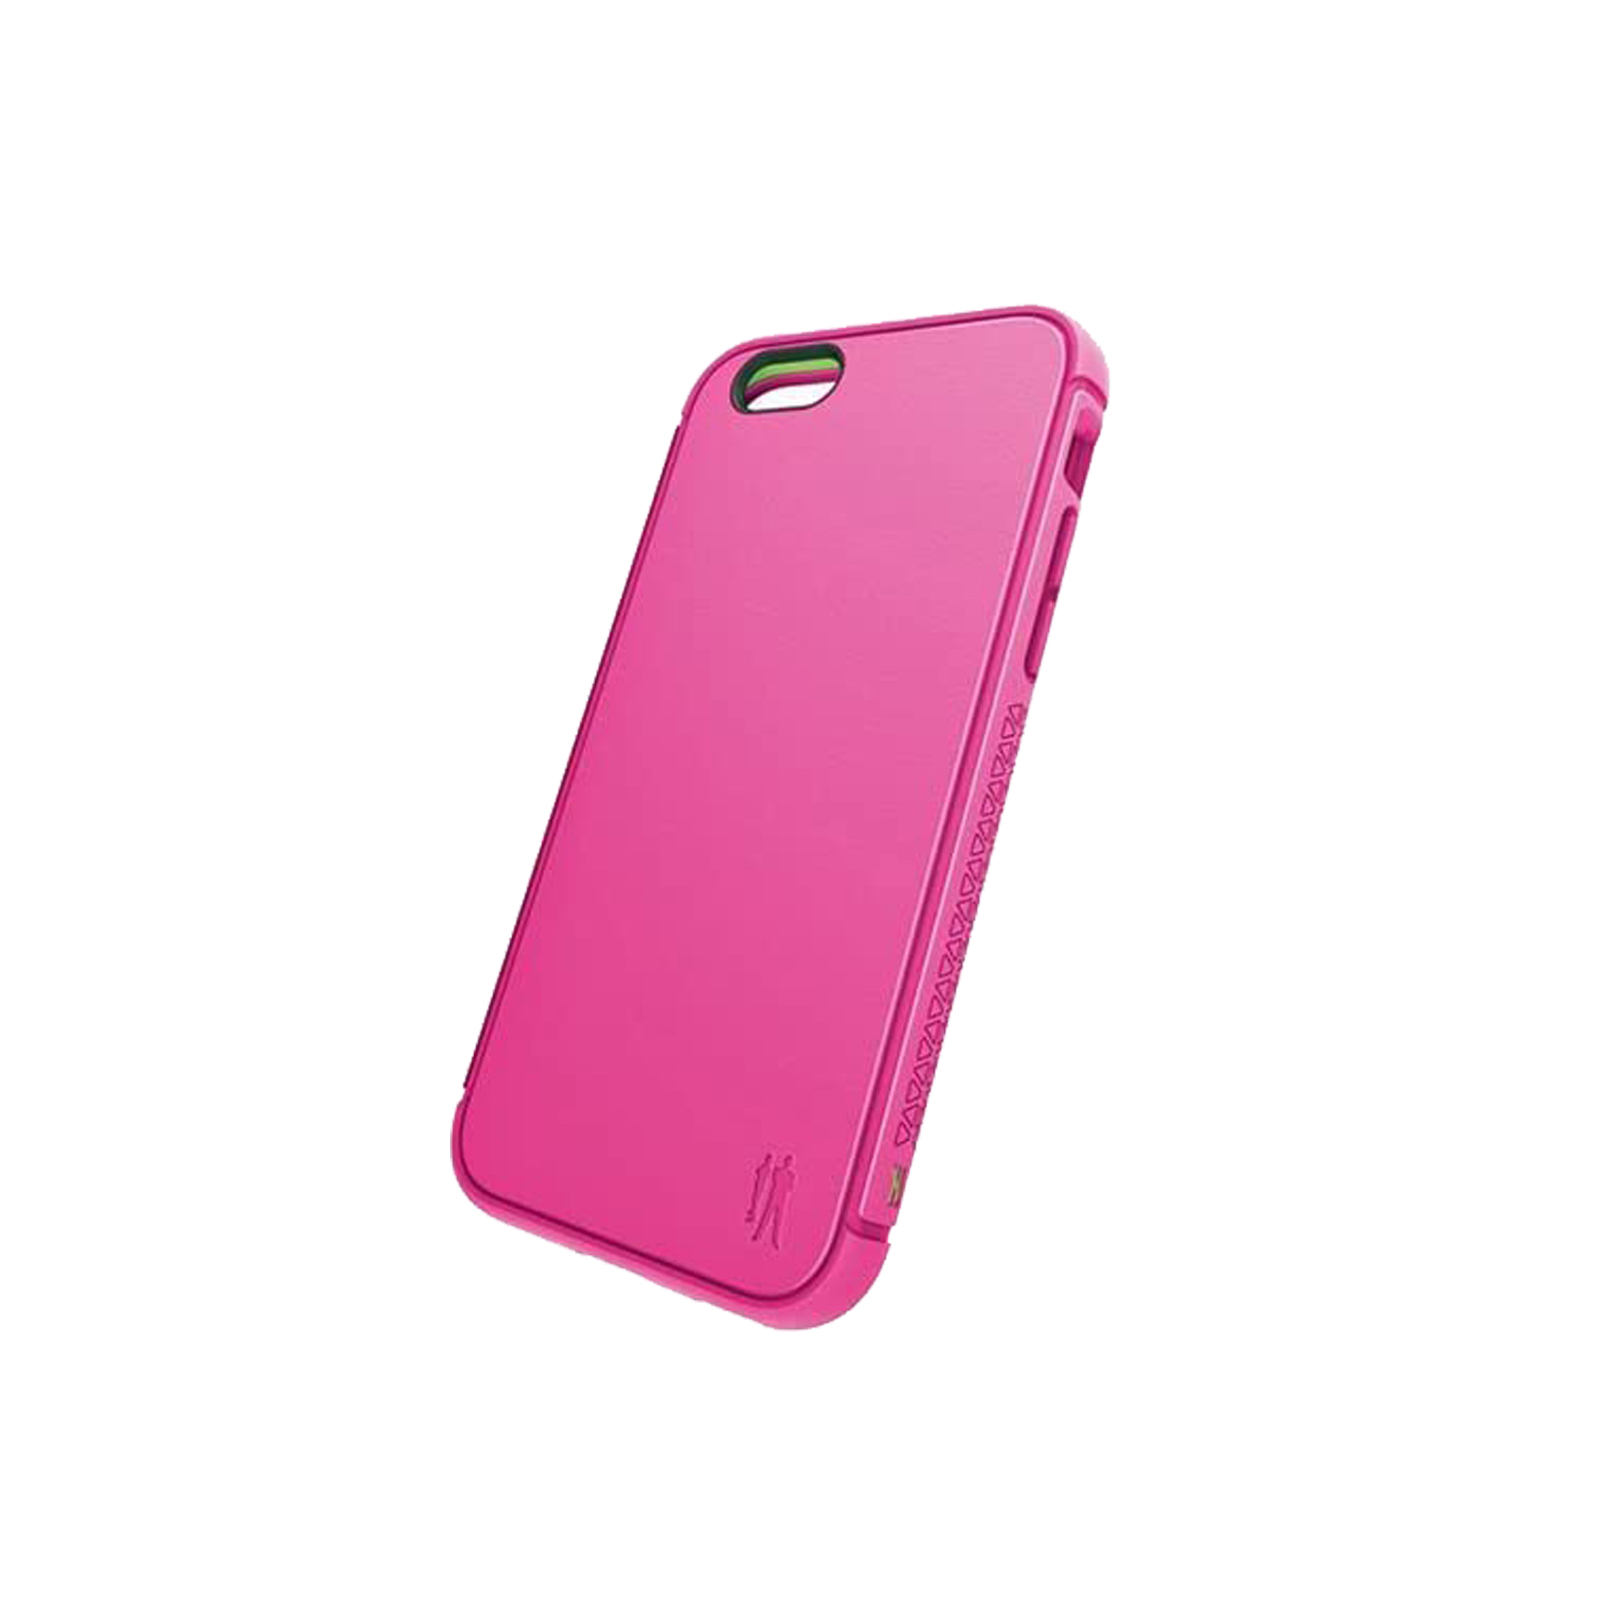 BodyGuardz Shock iPhone 6 Plus Pink Case - Brand New